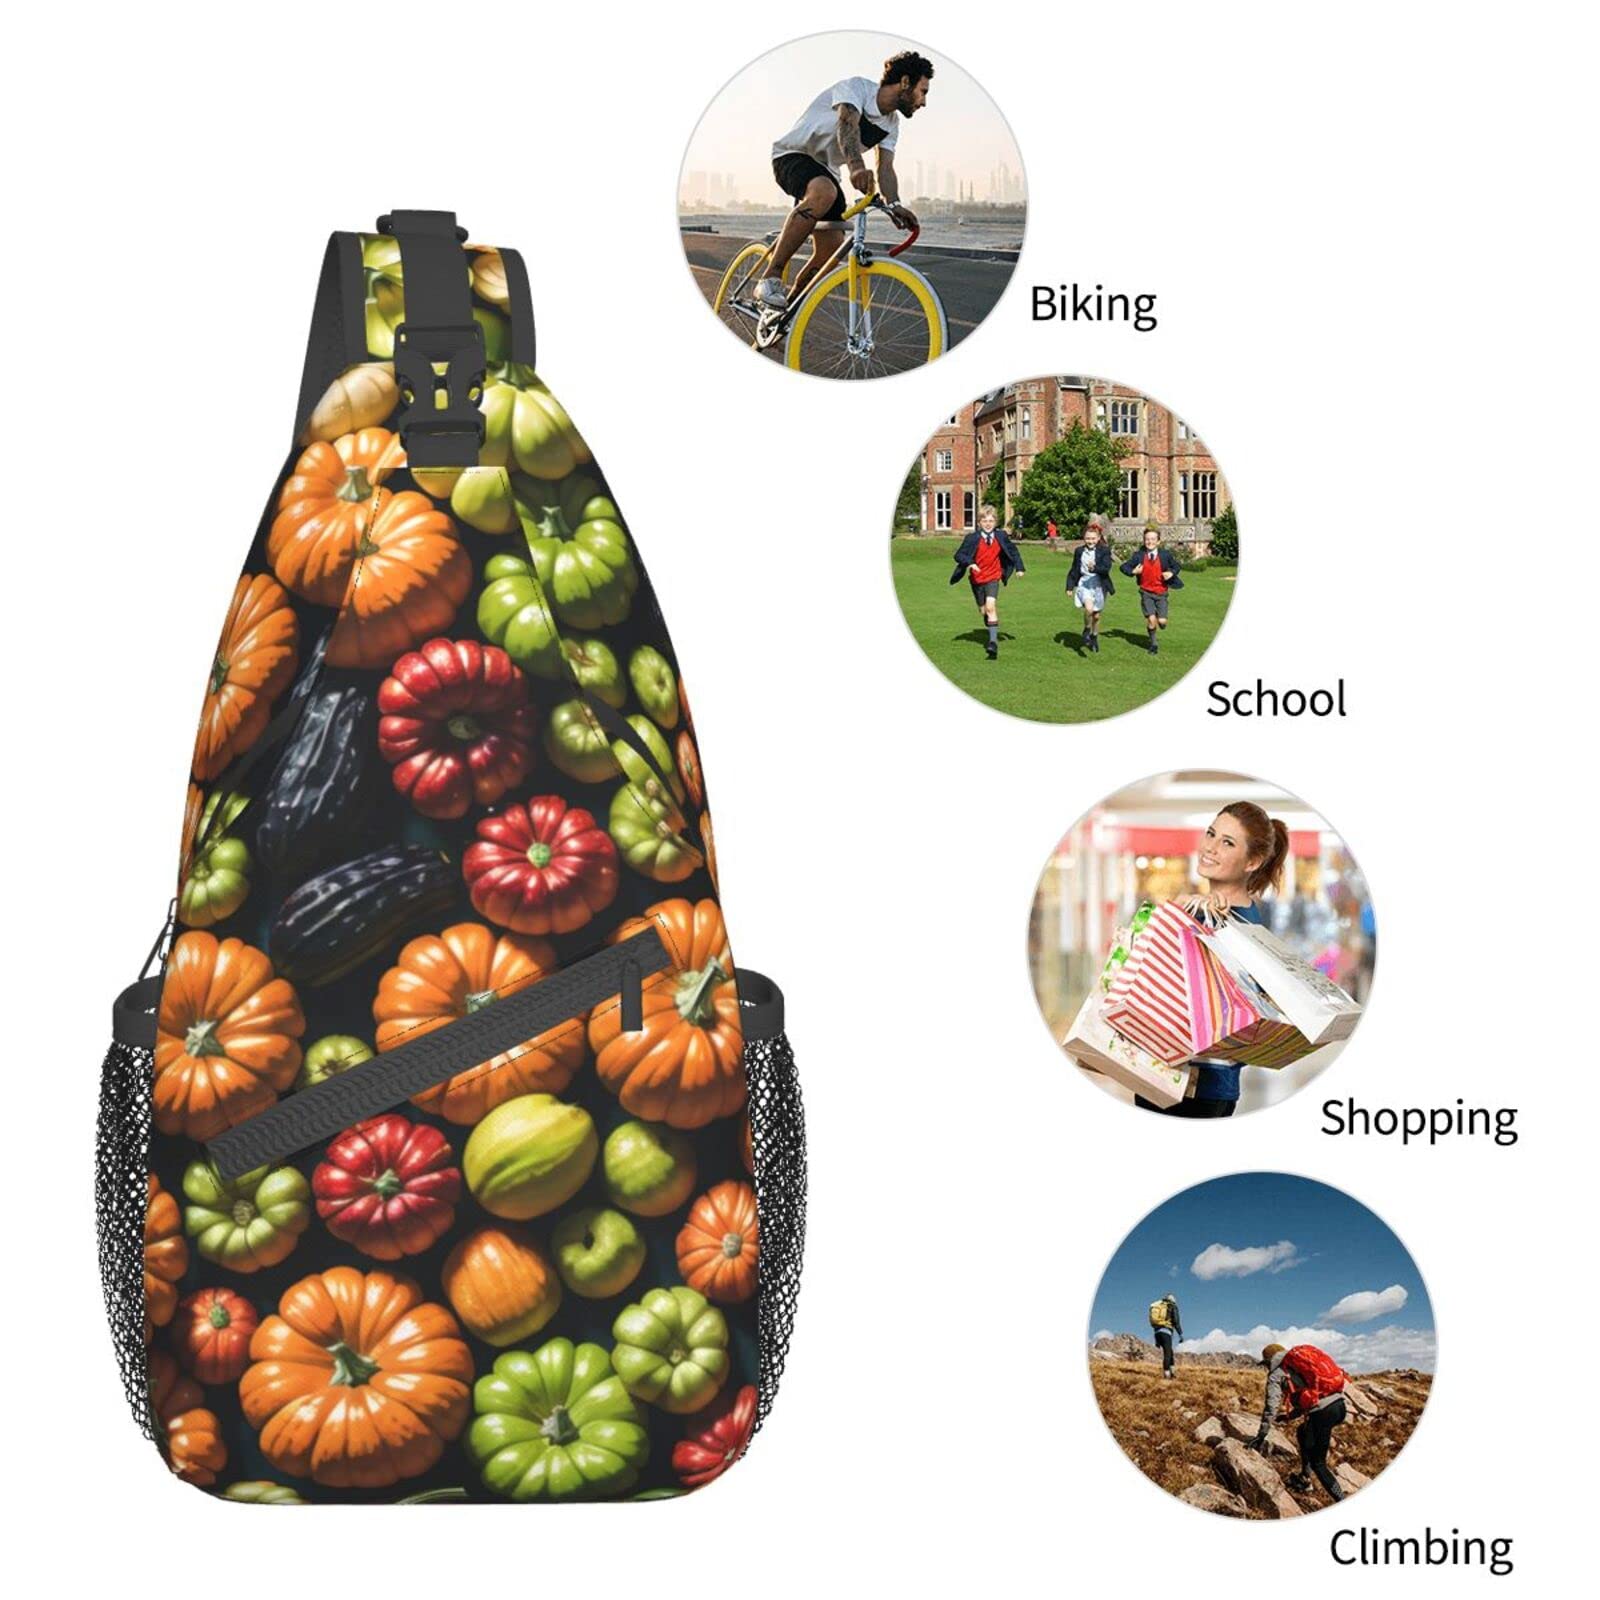 MIXMEY Fruits And Vegetable Print Cross Chest Bag Diagonally,Sling Backpack Fashion Travel Hiking Daypack Crossbody Shoulder Bag For Men Women